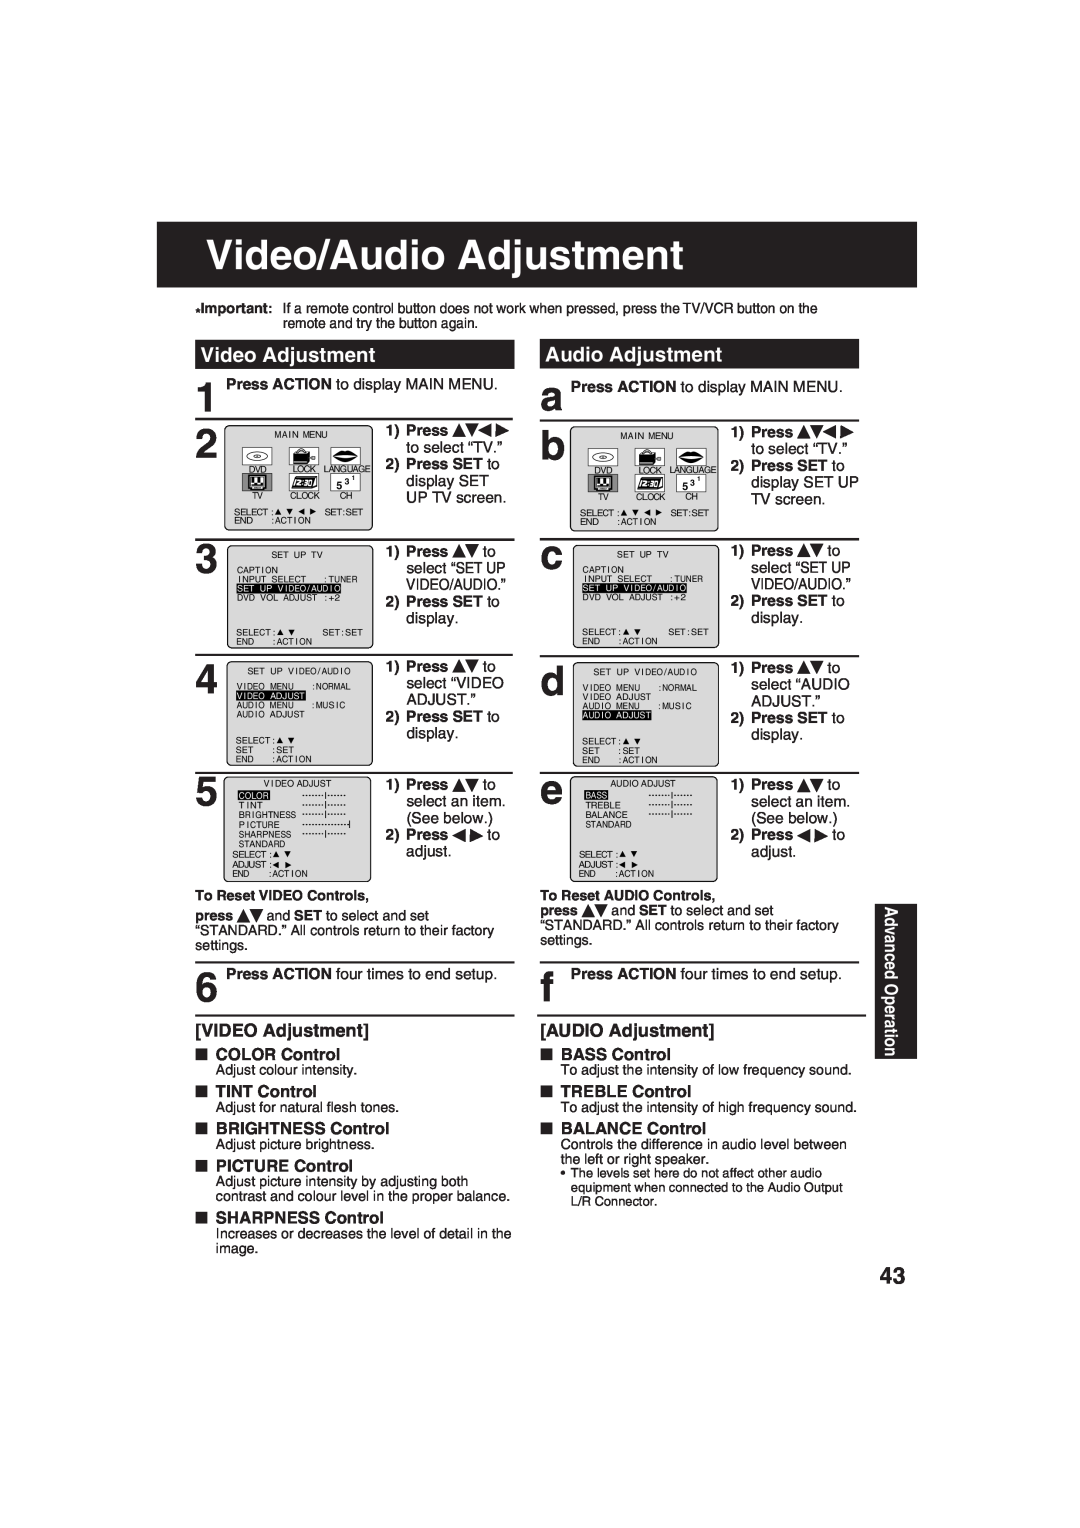 Panasonic PV-DF273 Video/Audio Adjustment, Video Adjustment, VIDEO Adjustment, AUDIO Adjustment, COLOR Control, Press 